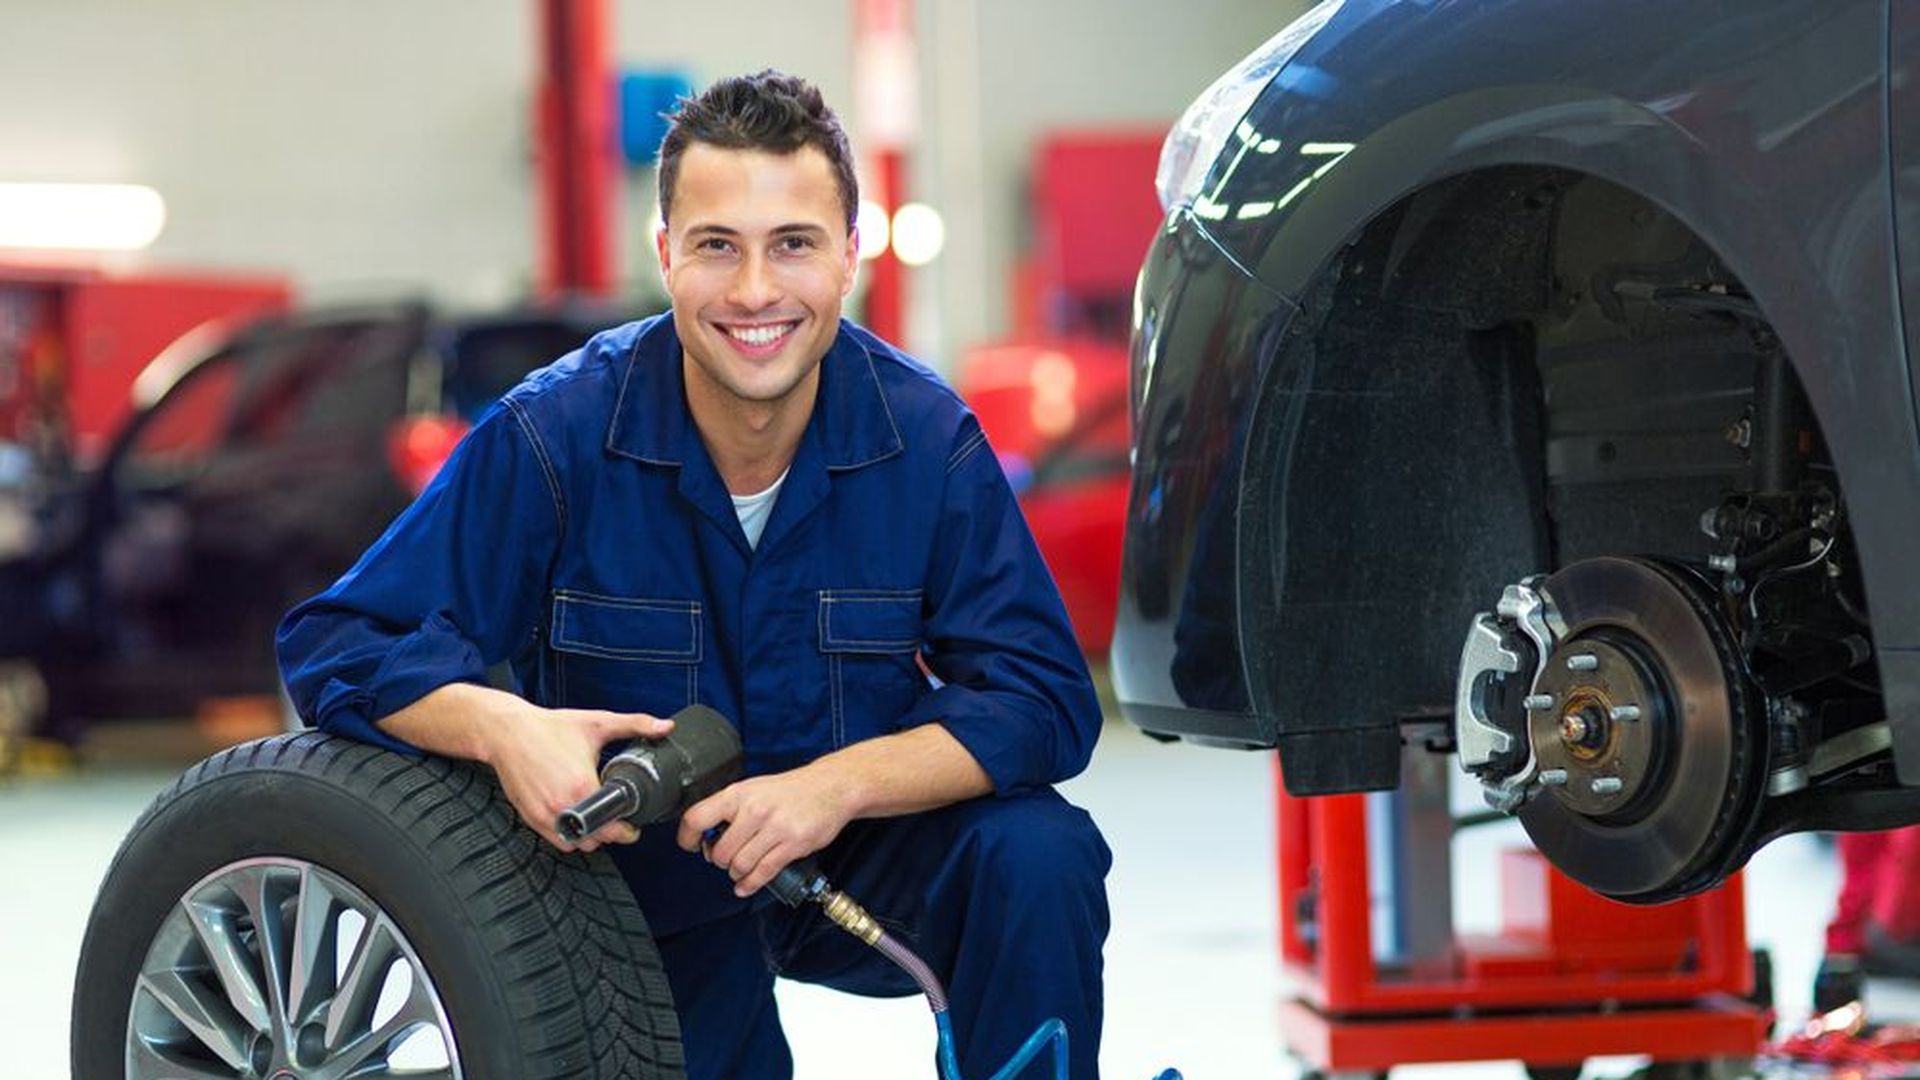 Auto Repair And Service Apprenticeship Shortage Education Training And Employment Australia